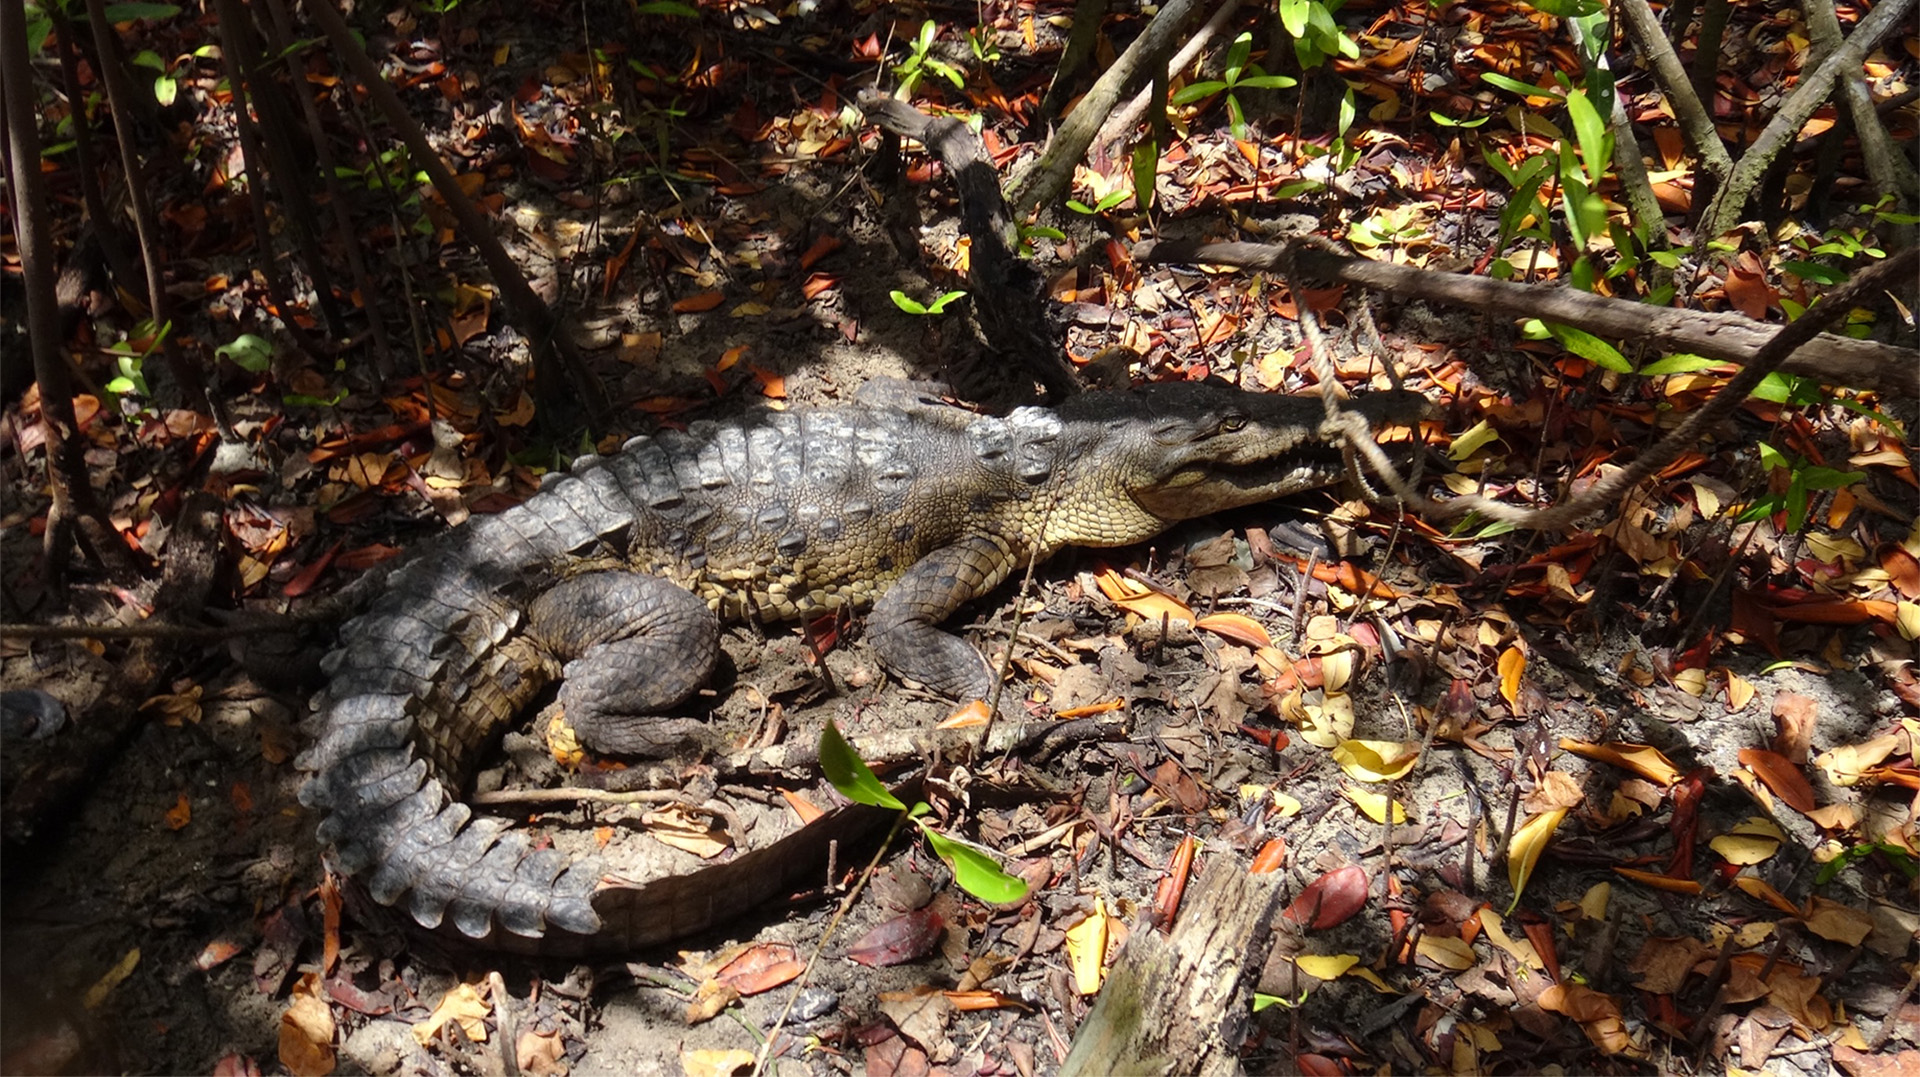 American crocodile in Jamaica - UF Croc Docs - The Explorers Organisation © UF Croc Docs